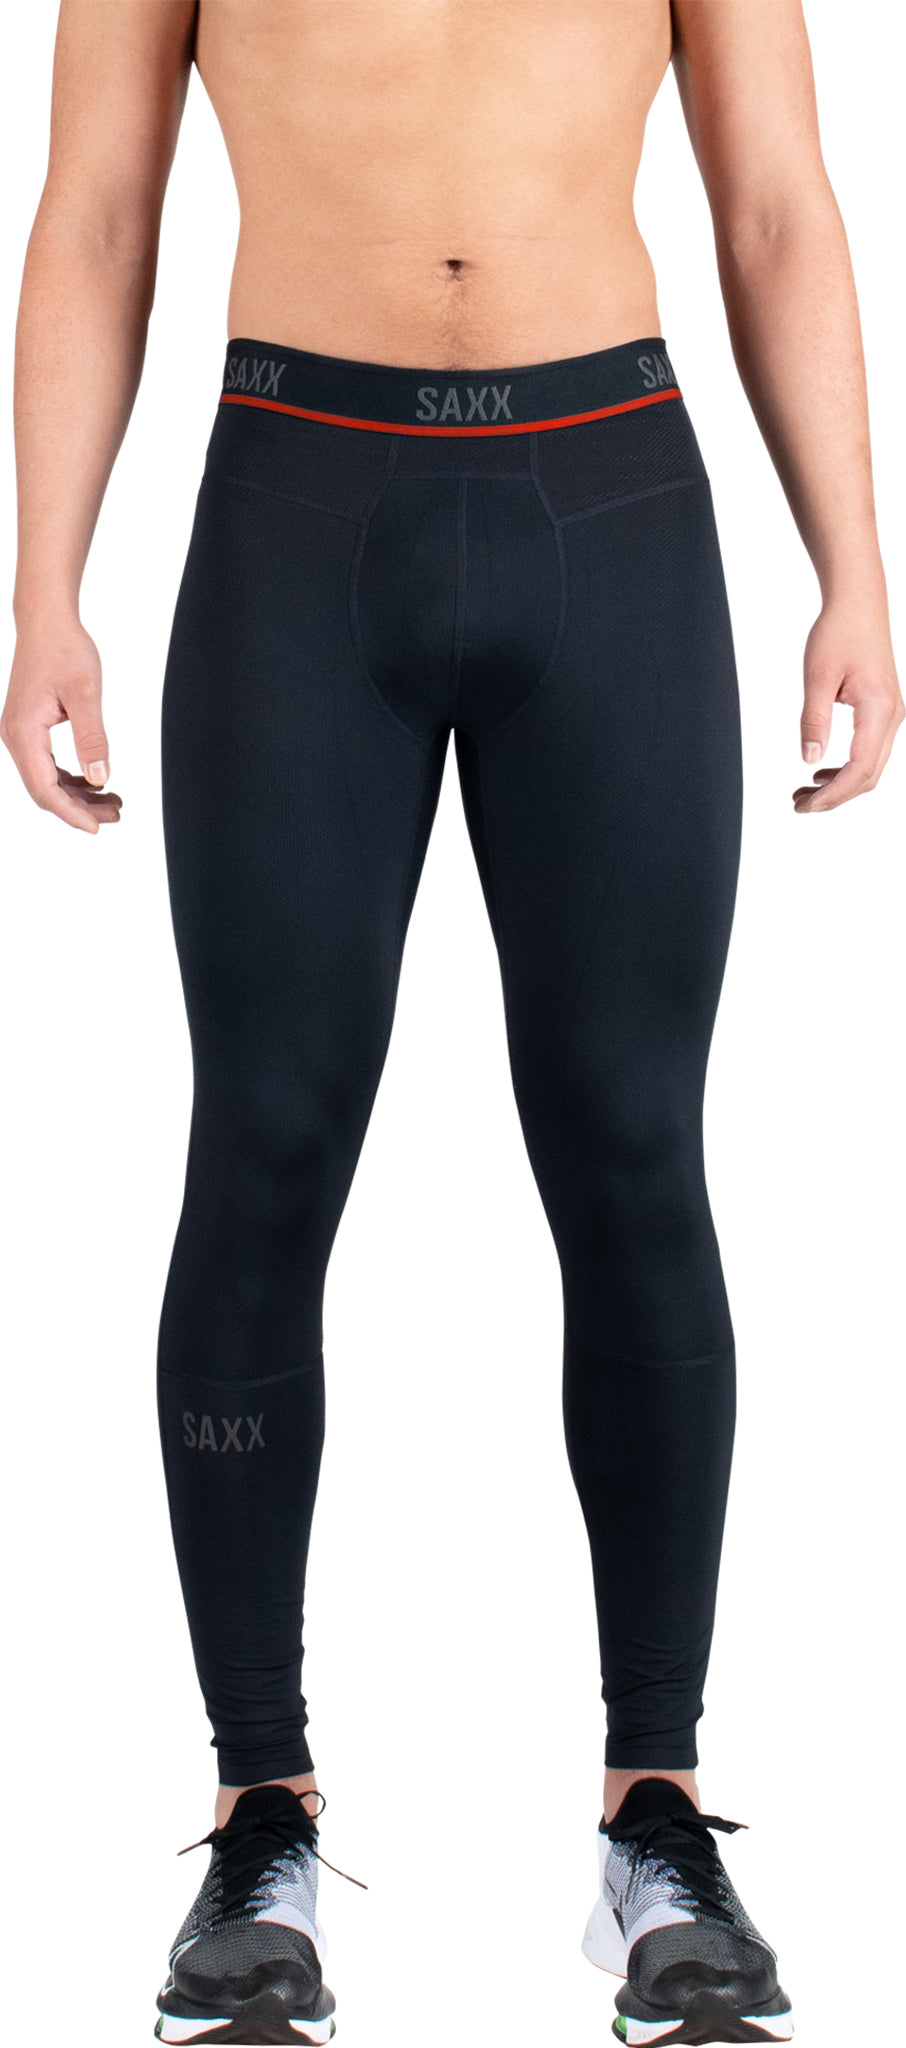  SAXX Men's Underwear - Kinetic Light-Compression Mesh